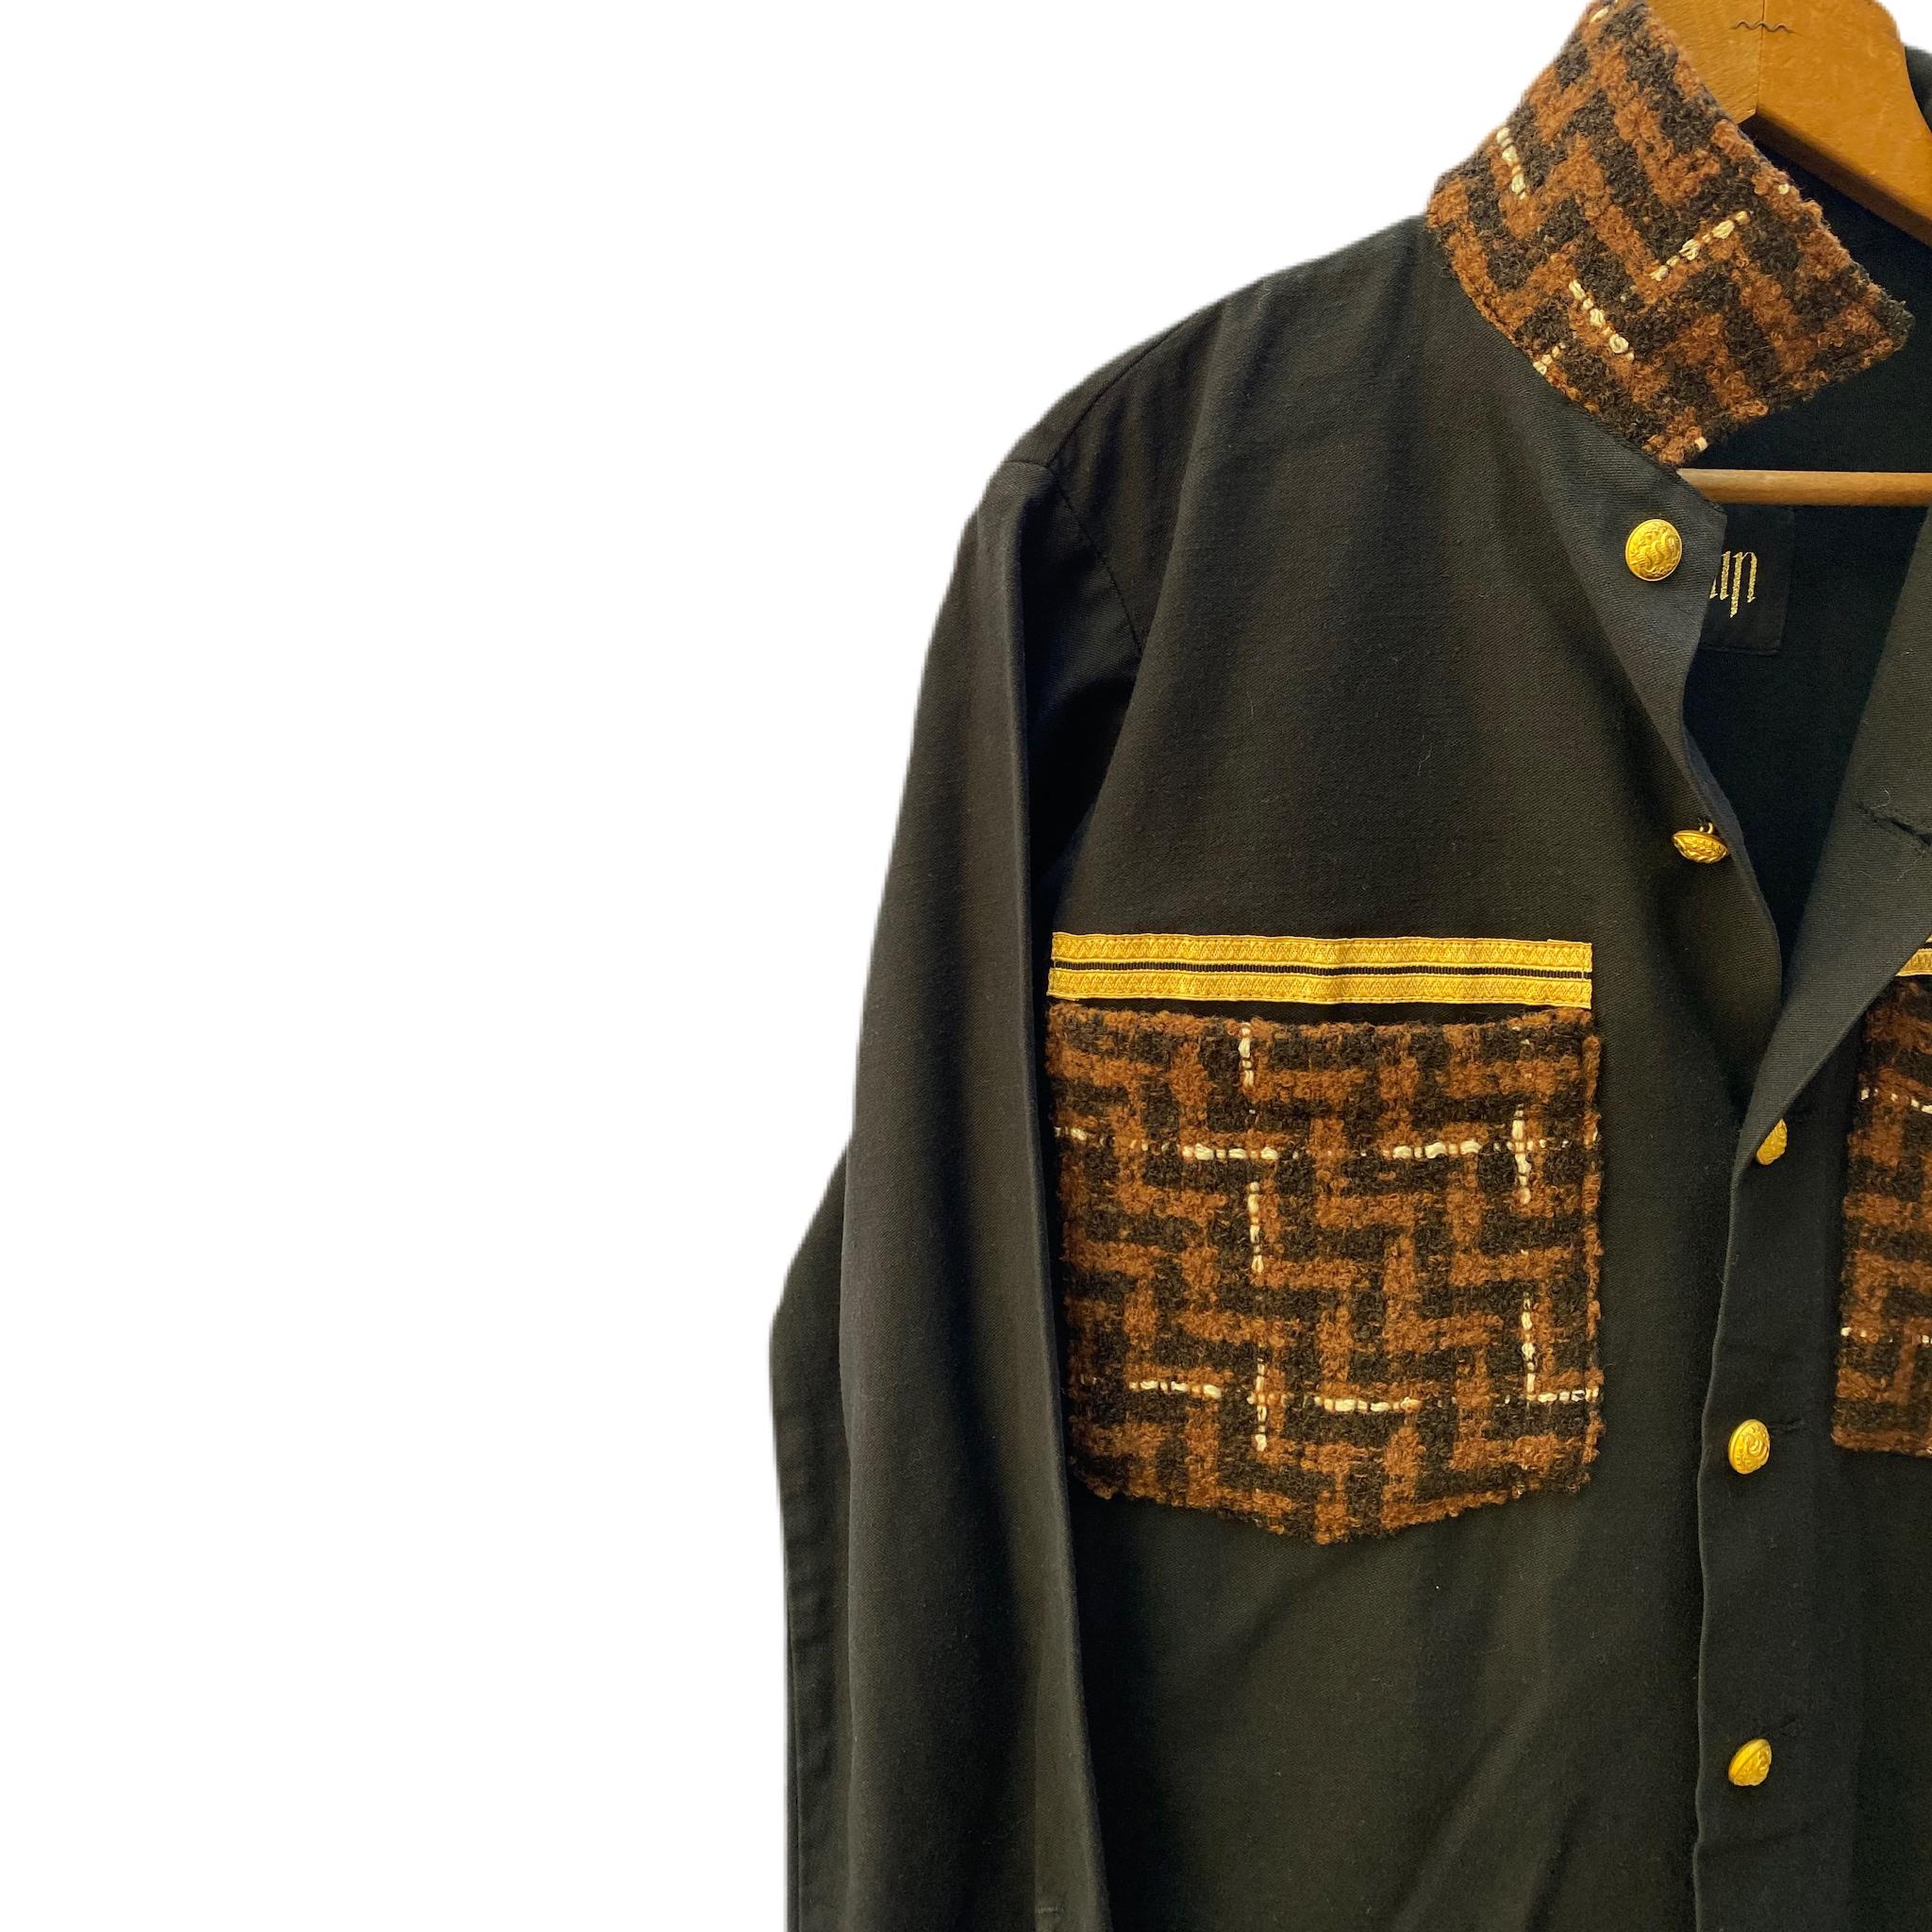 Black Jacket Military Brown Wool Tweed Gold Braid Buttons J Dauphin

Original Vintage US Military Fatigue Shirt Jacket Repurposed and Embellished with Brown Wool Tweed Gold Braid.
Original Military Vintage Gold tone Buttons in brass
Size: